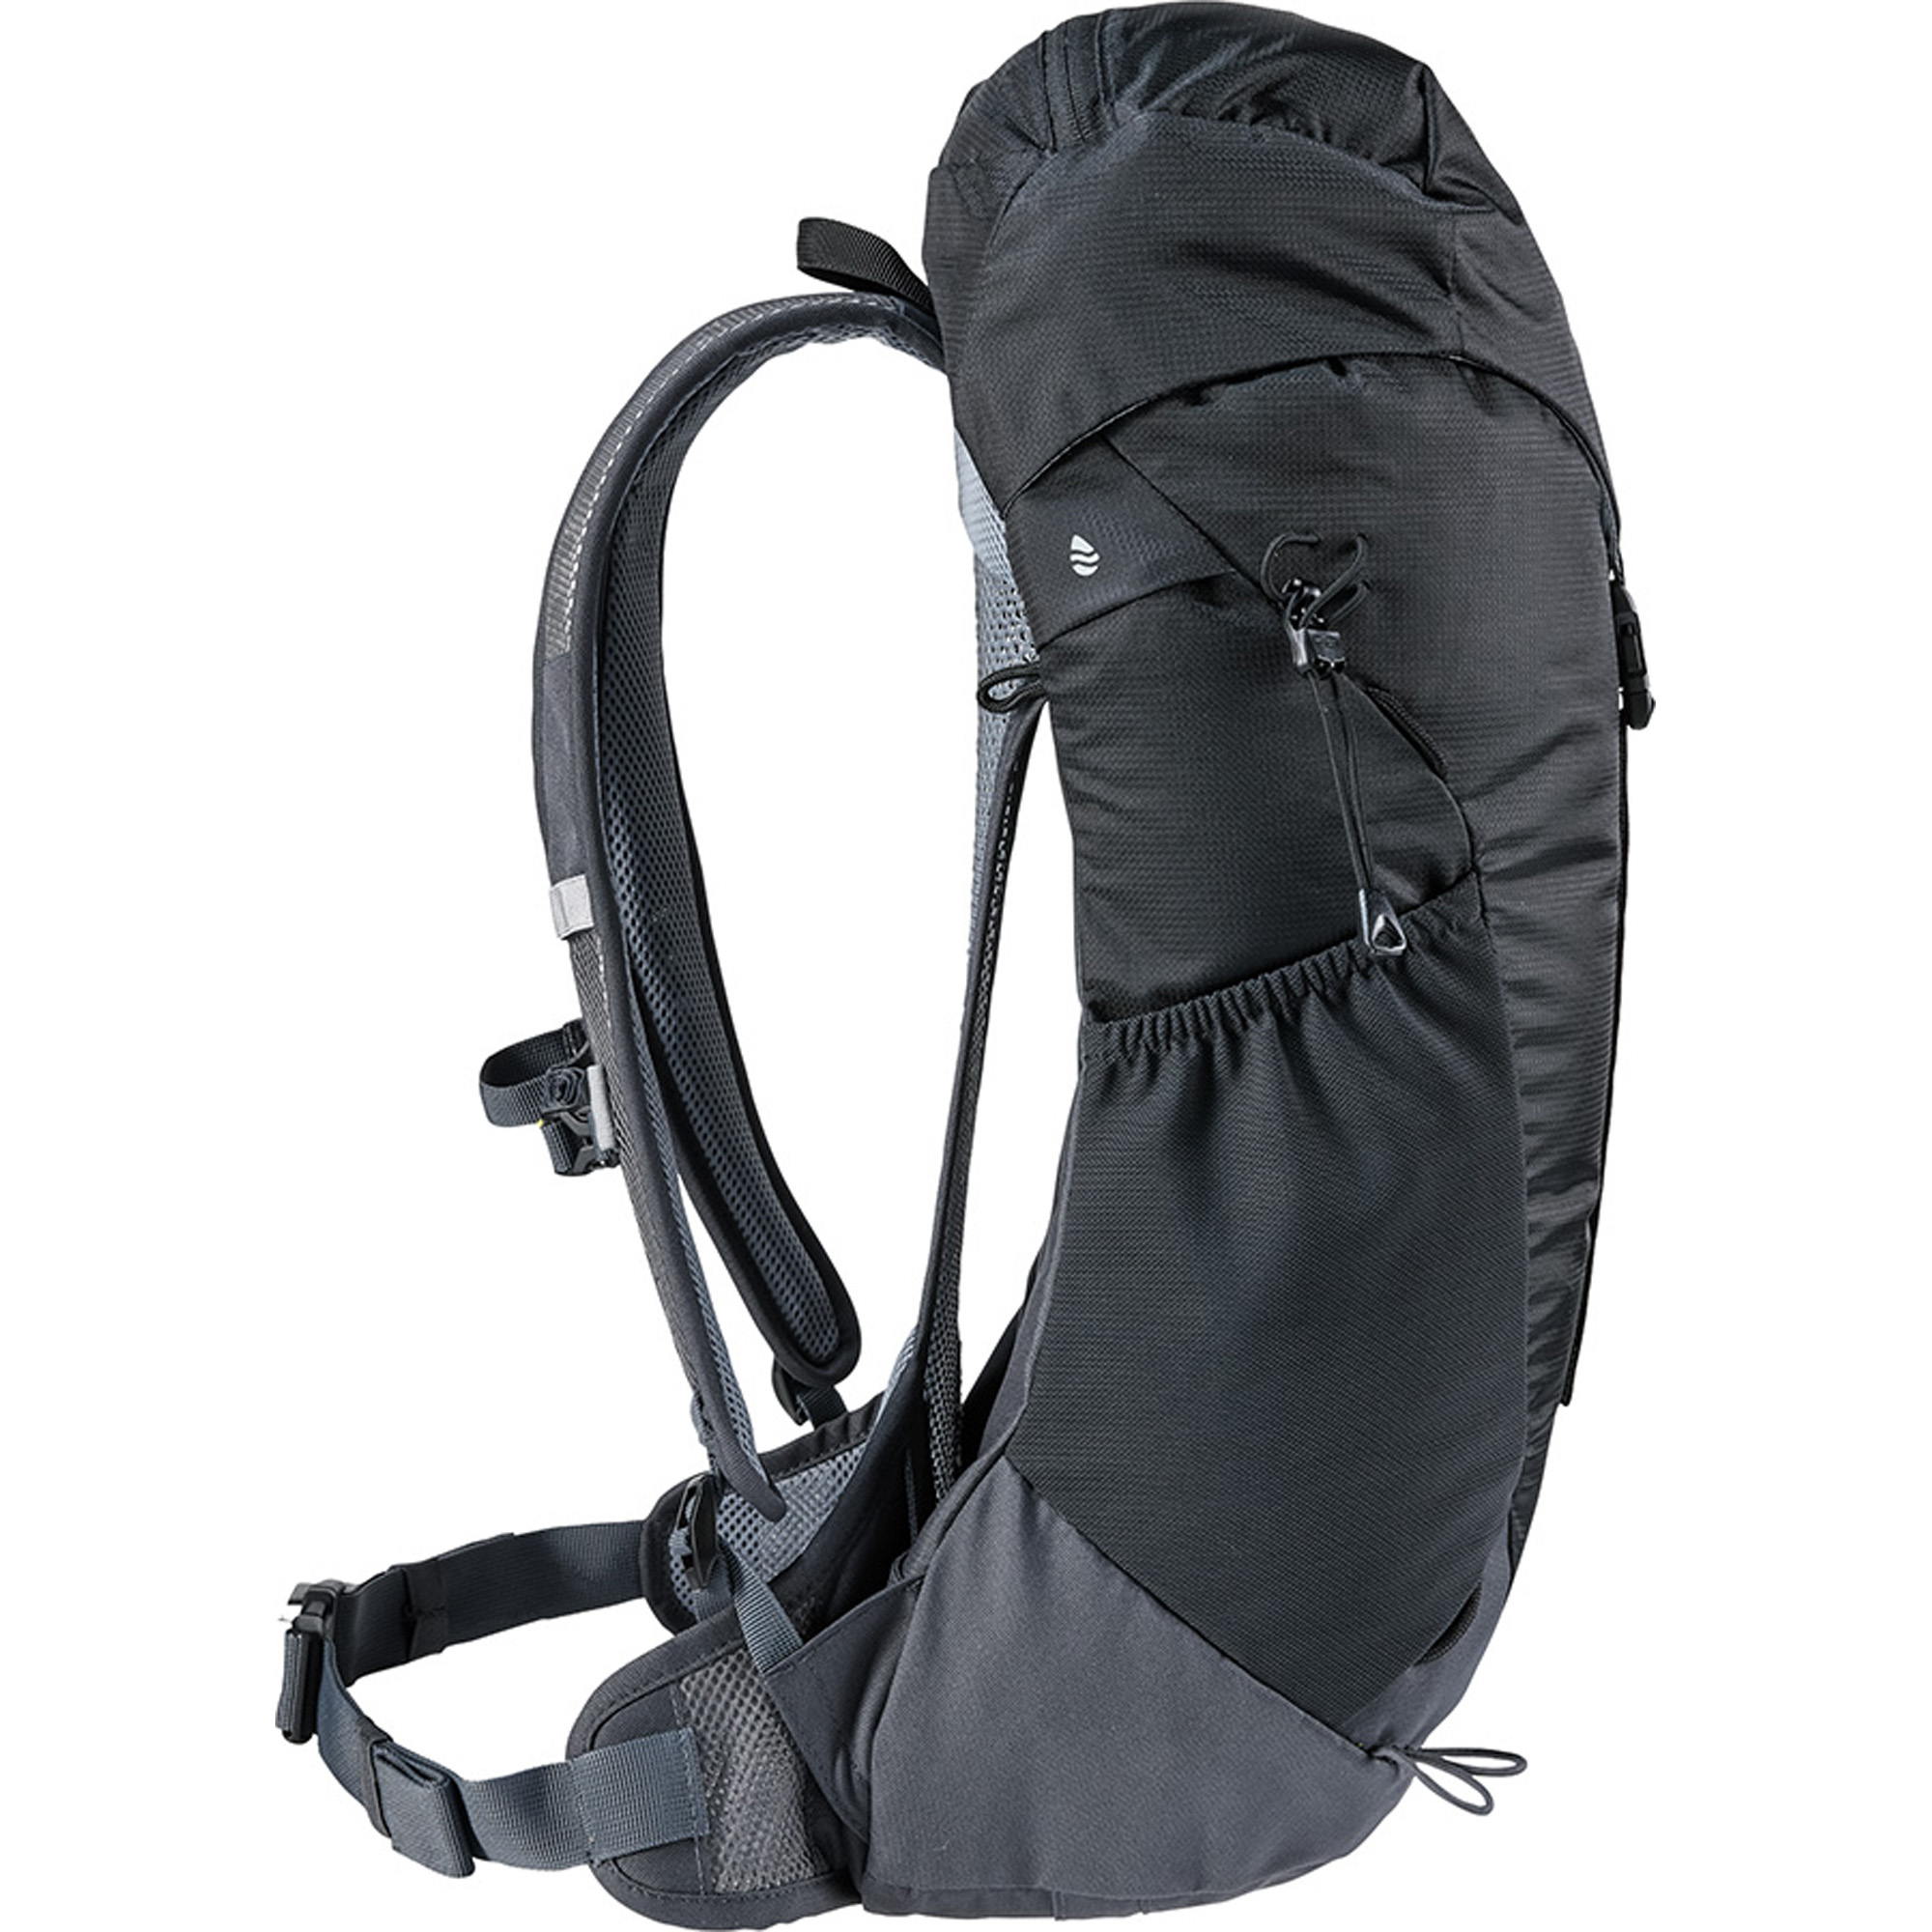 Deuter AC Lite 16 Daypack Hiking Backpack